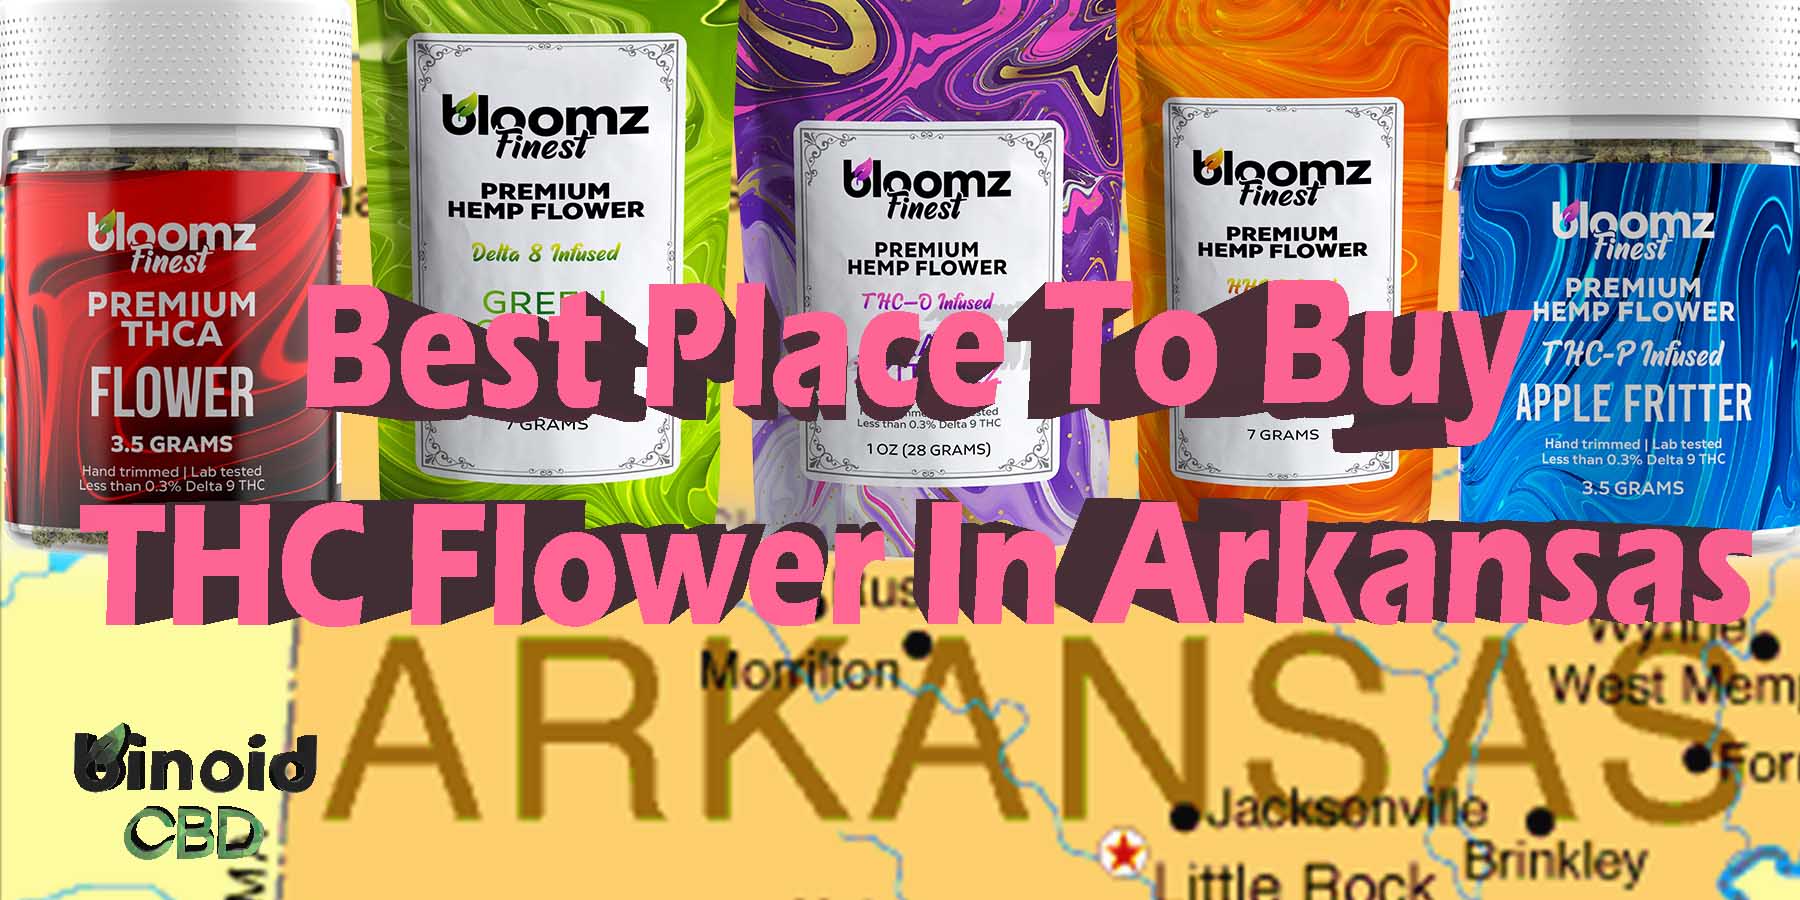 Buy THC Flower Arkansas Joints PreRolls Get Online Near Me For Sale Best Brand Strongest Real Legal Store Shop Reddit